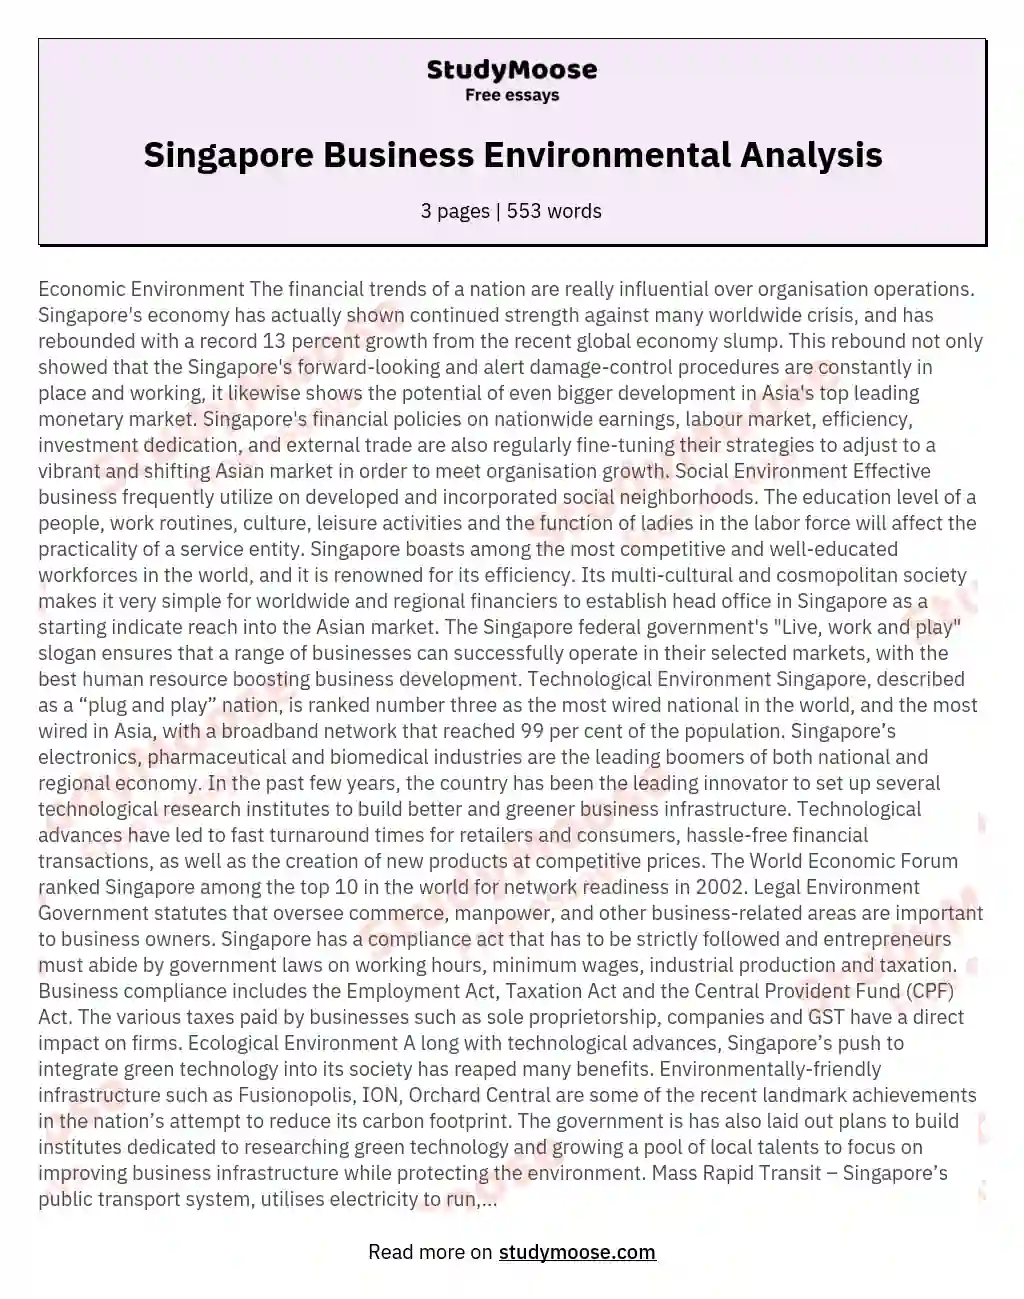 Singapore Business Environmental Analysis essay